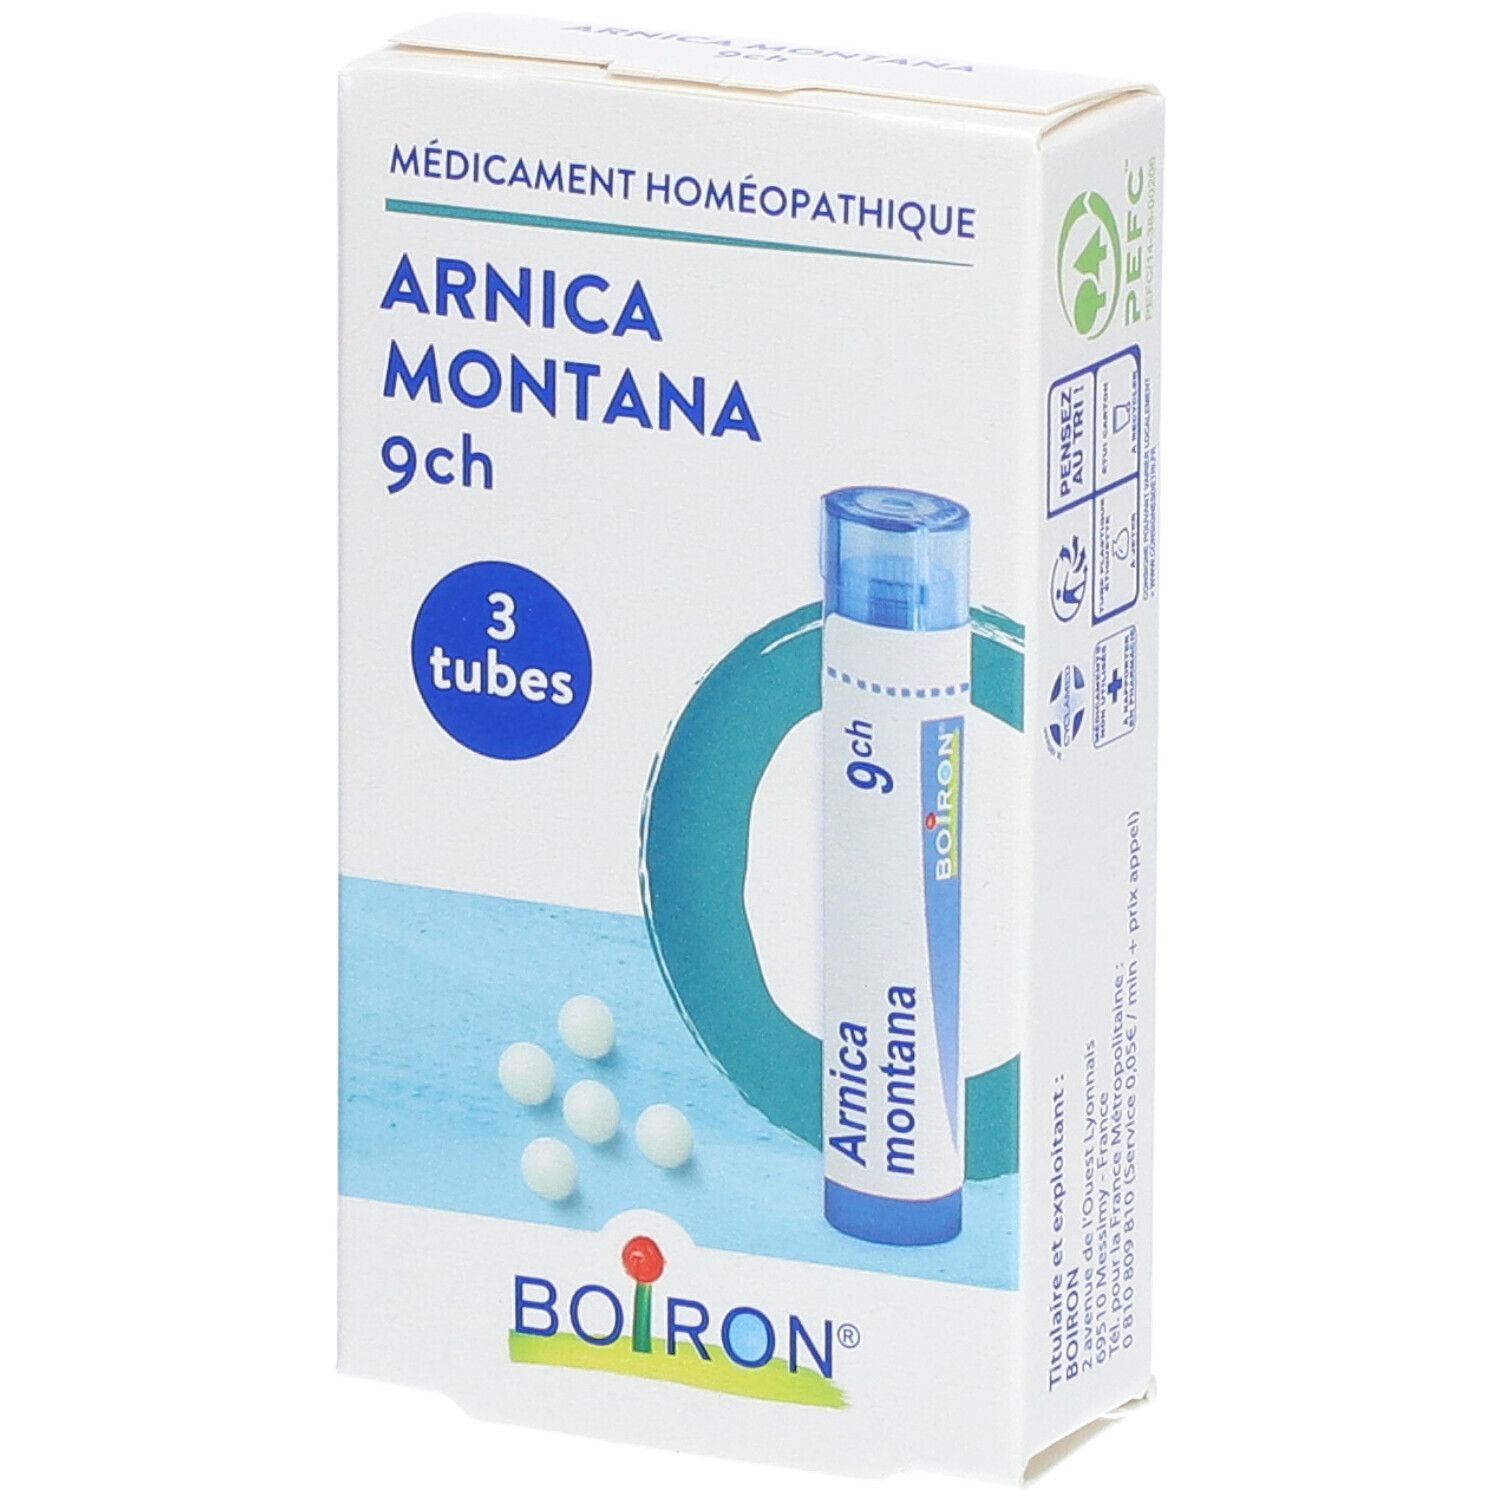 Boiron® Arnica Montana 9ch